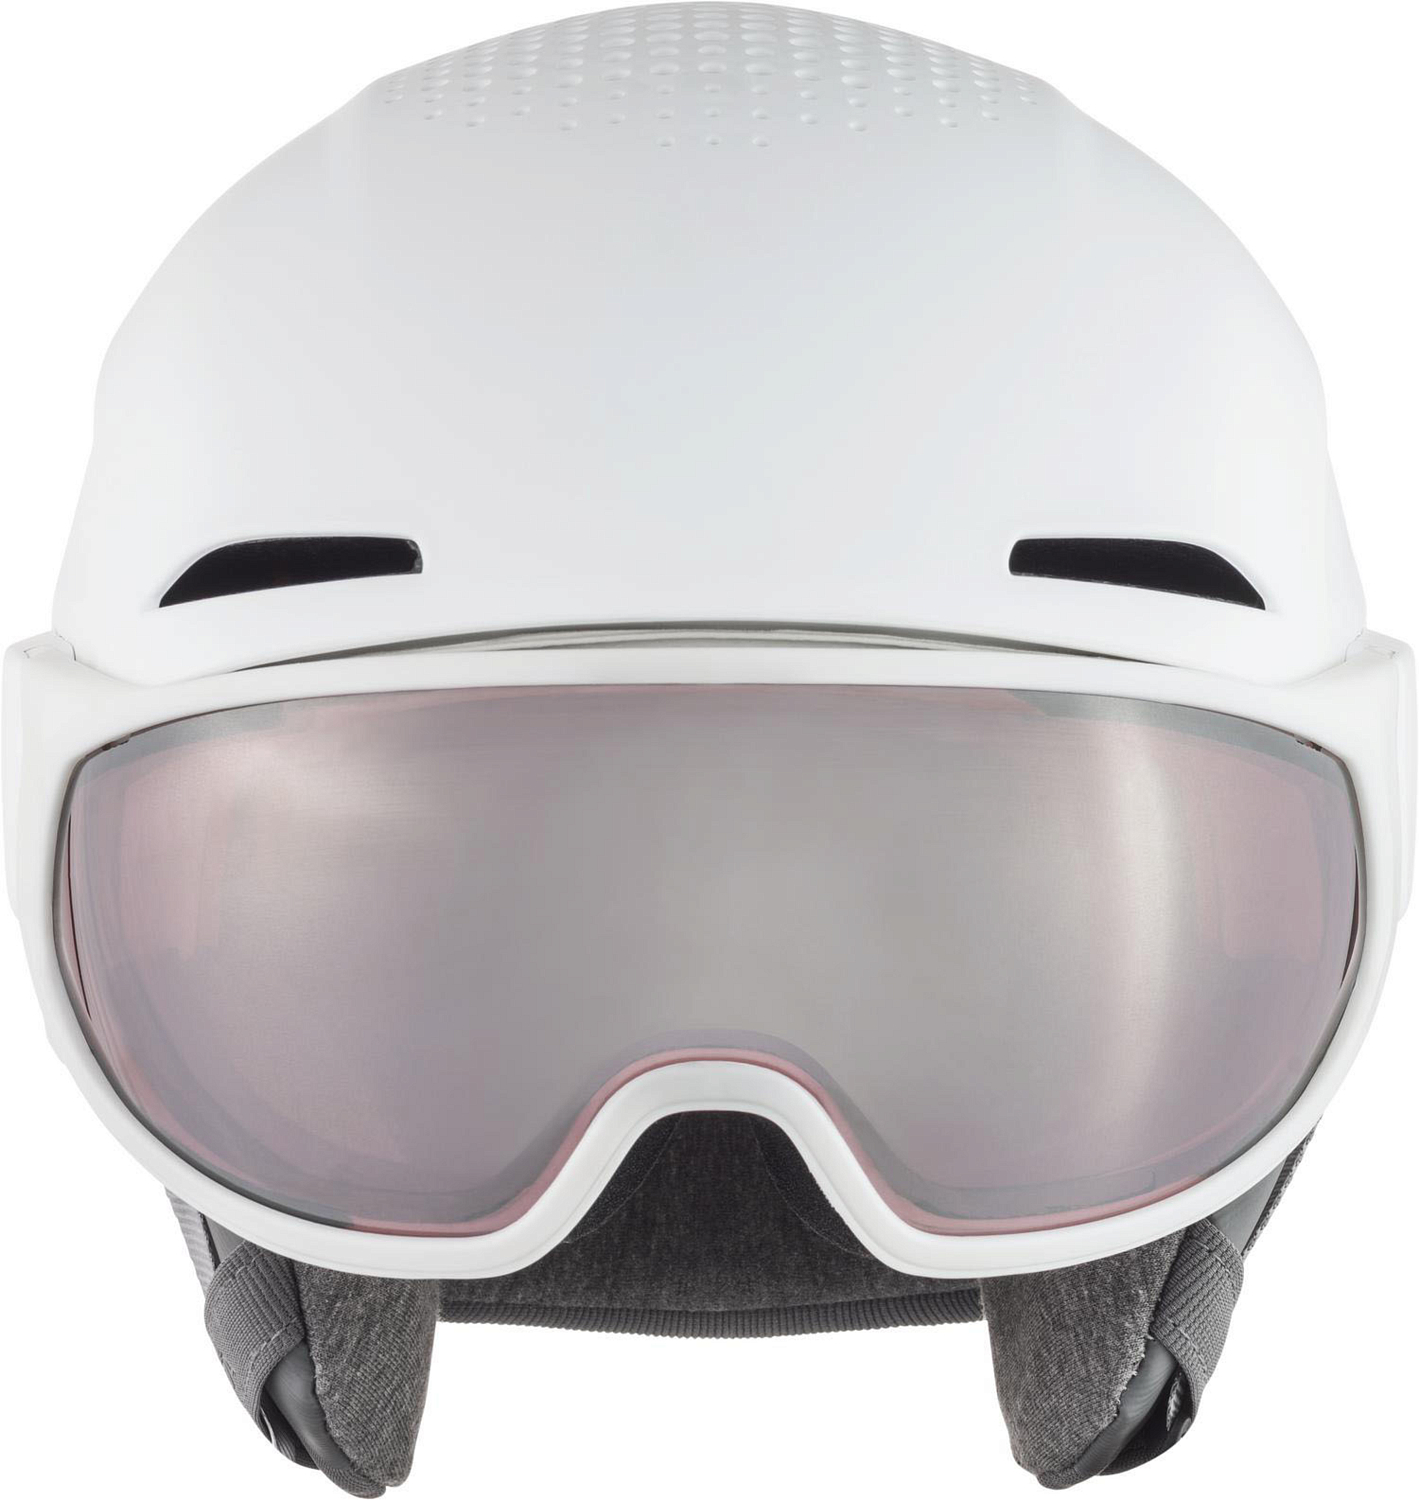 Шлем с визором ALPINA Alto Qv White Matt